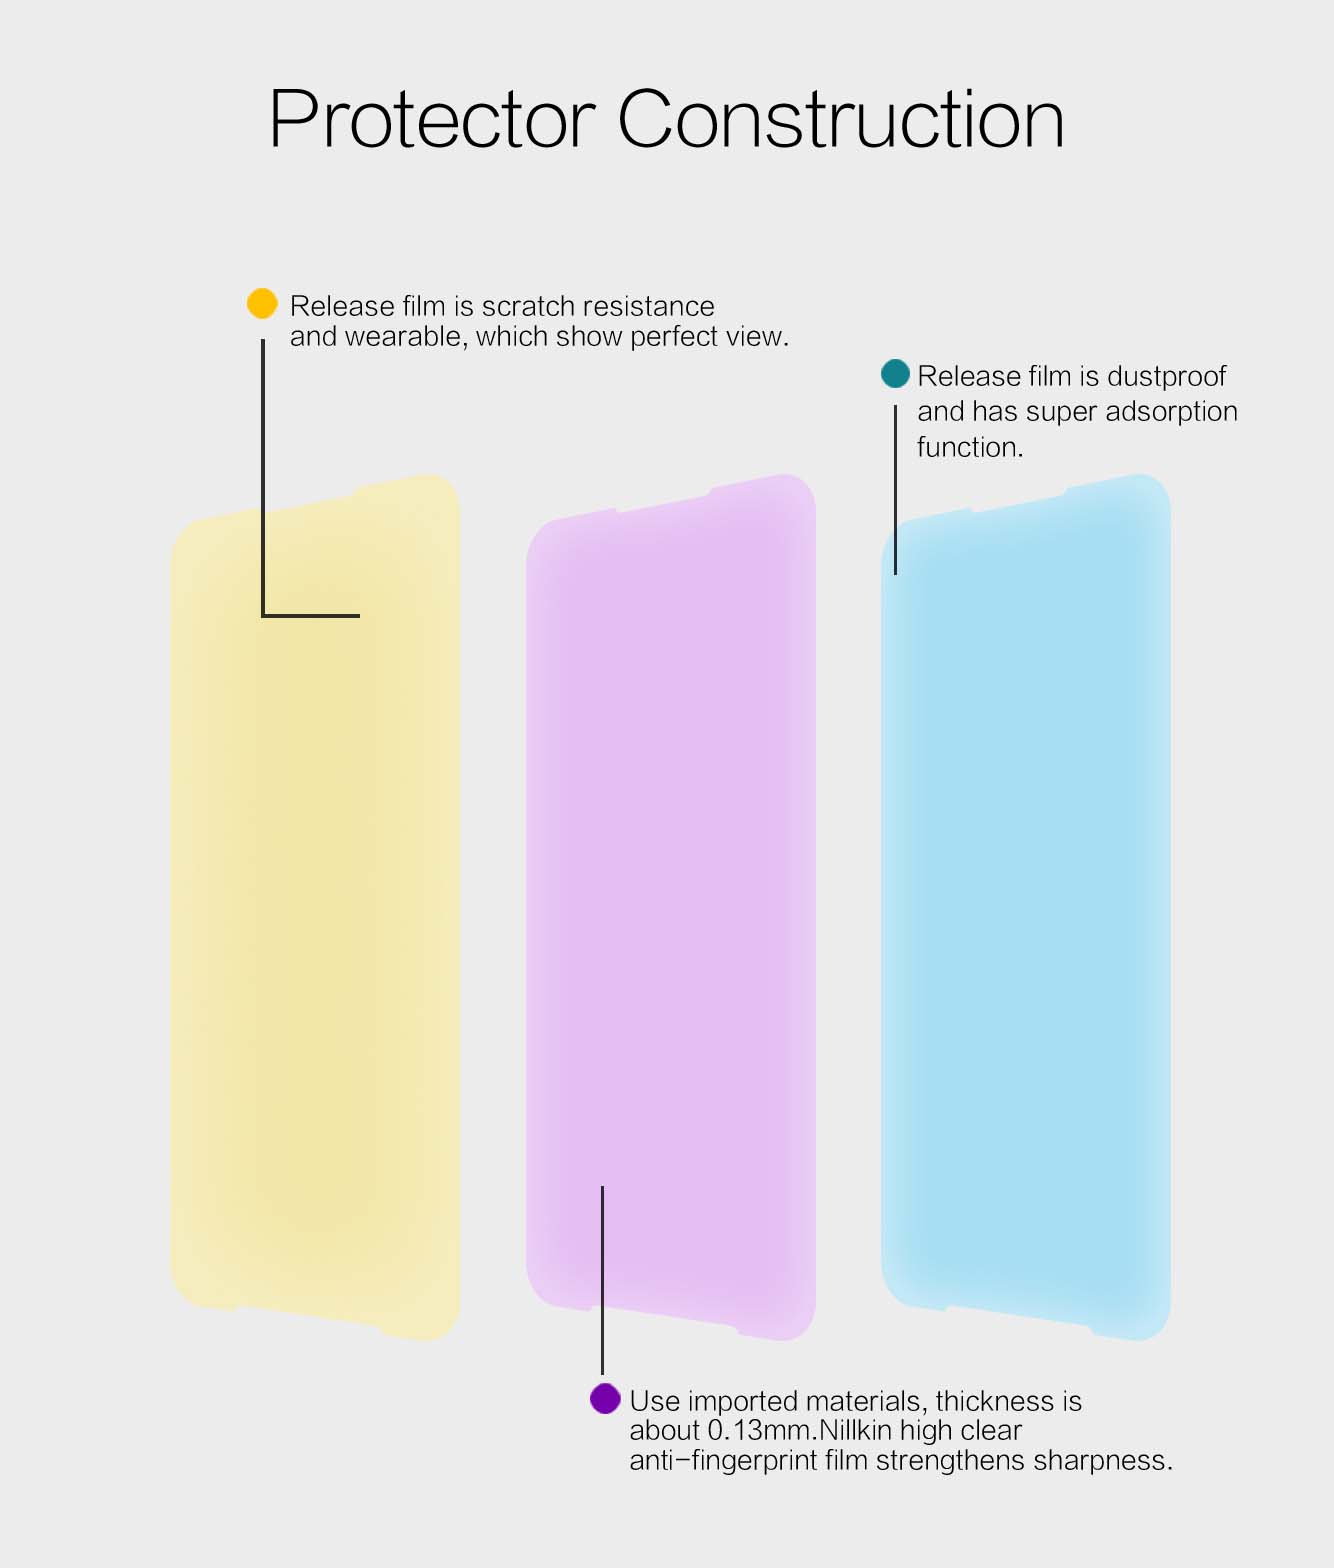 Xiaomi Black Shark 3 Pro screen protector